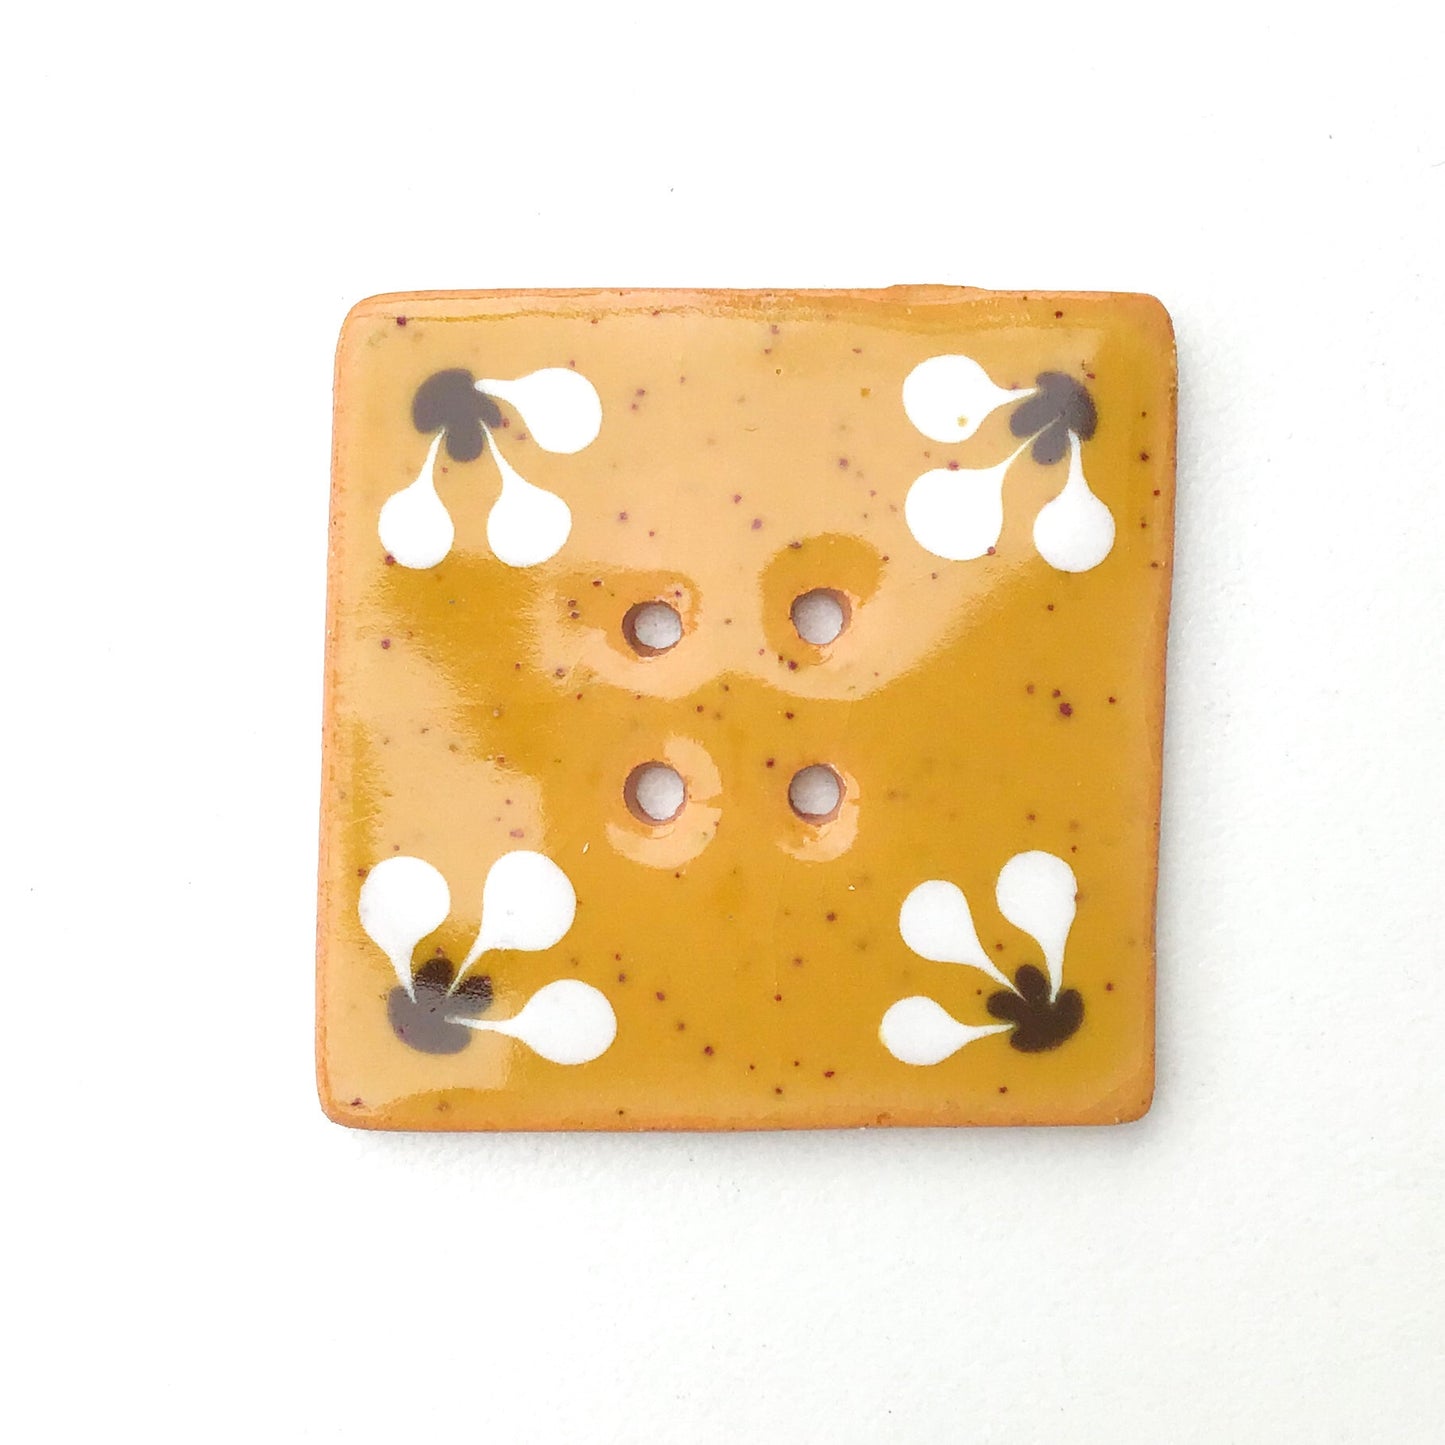 Large Square Decorative Button - Speckled Mustard - Brown - White - Art Button - 1 7/16"